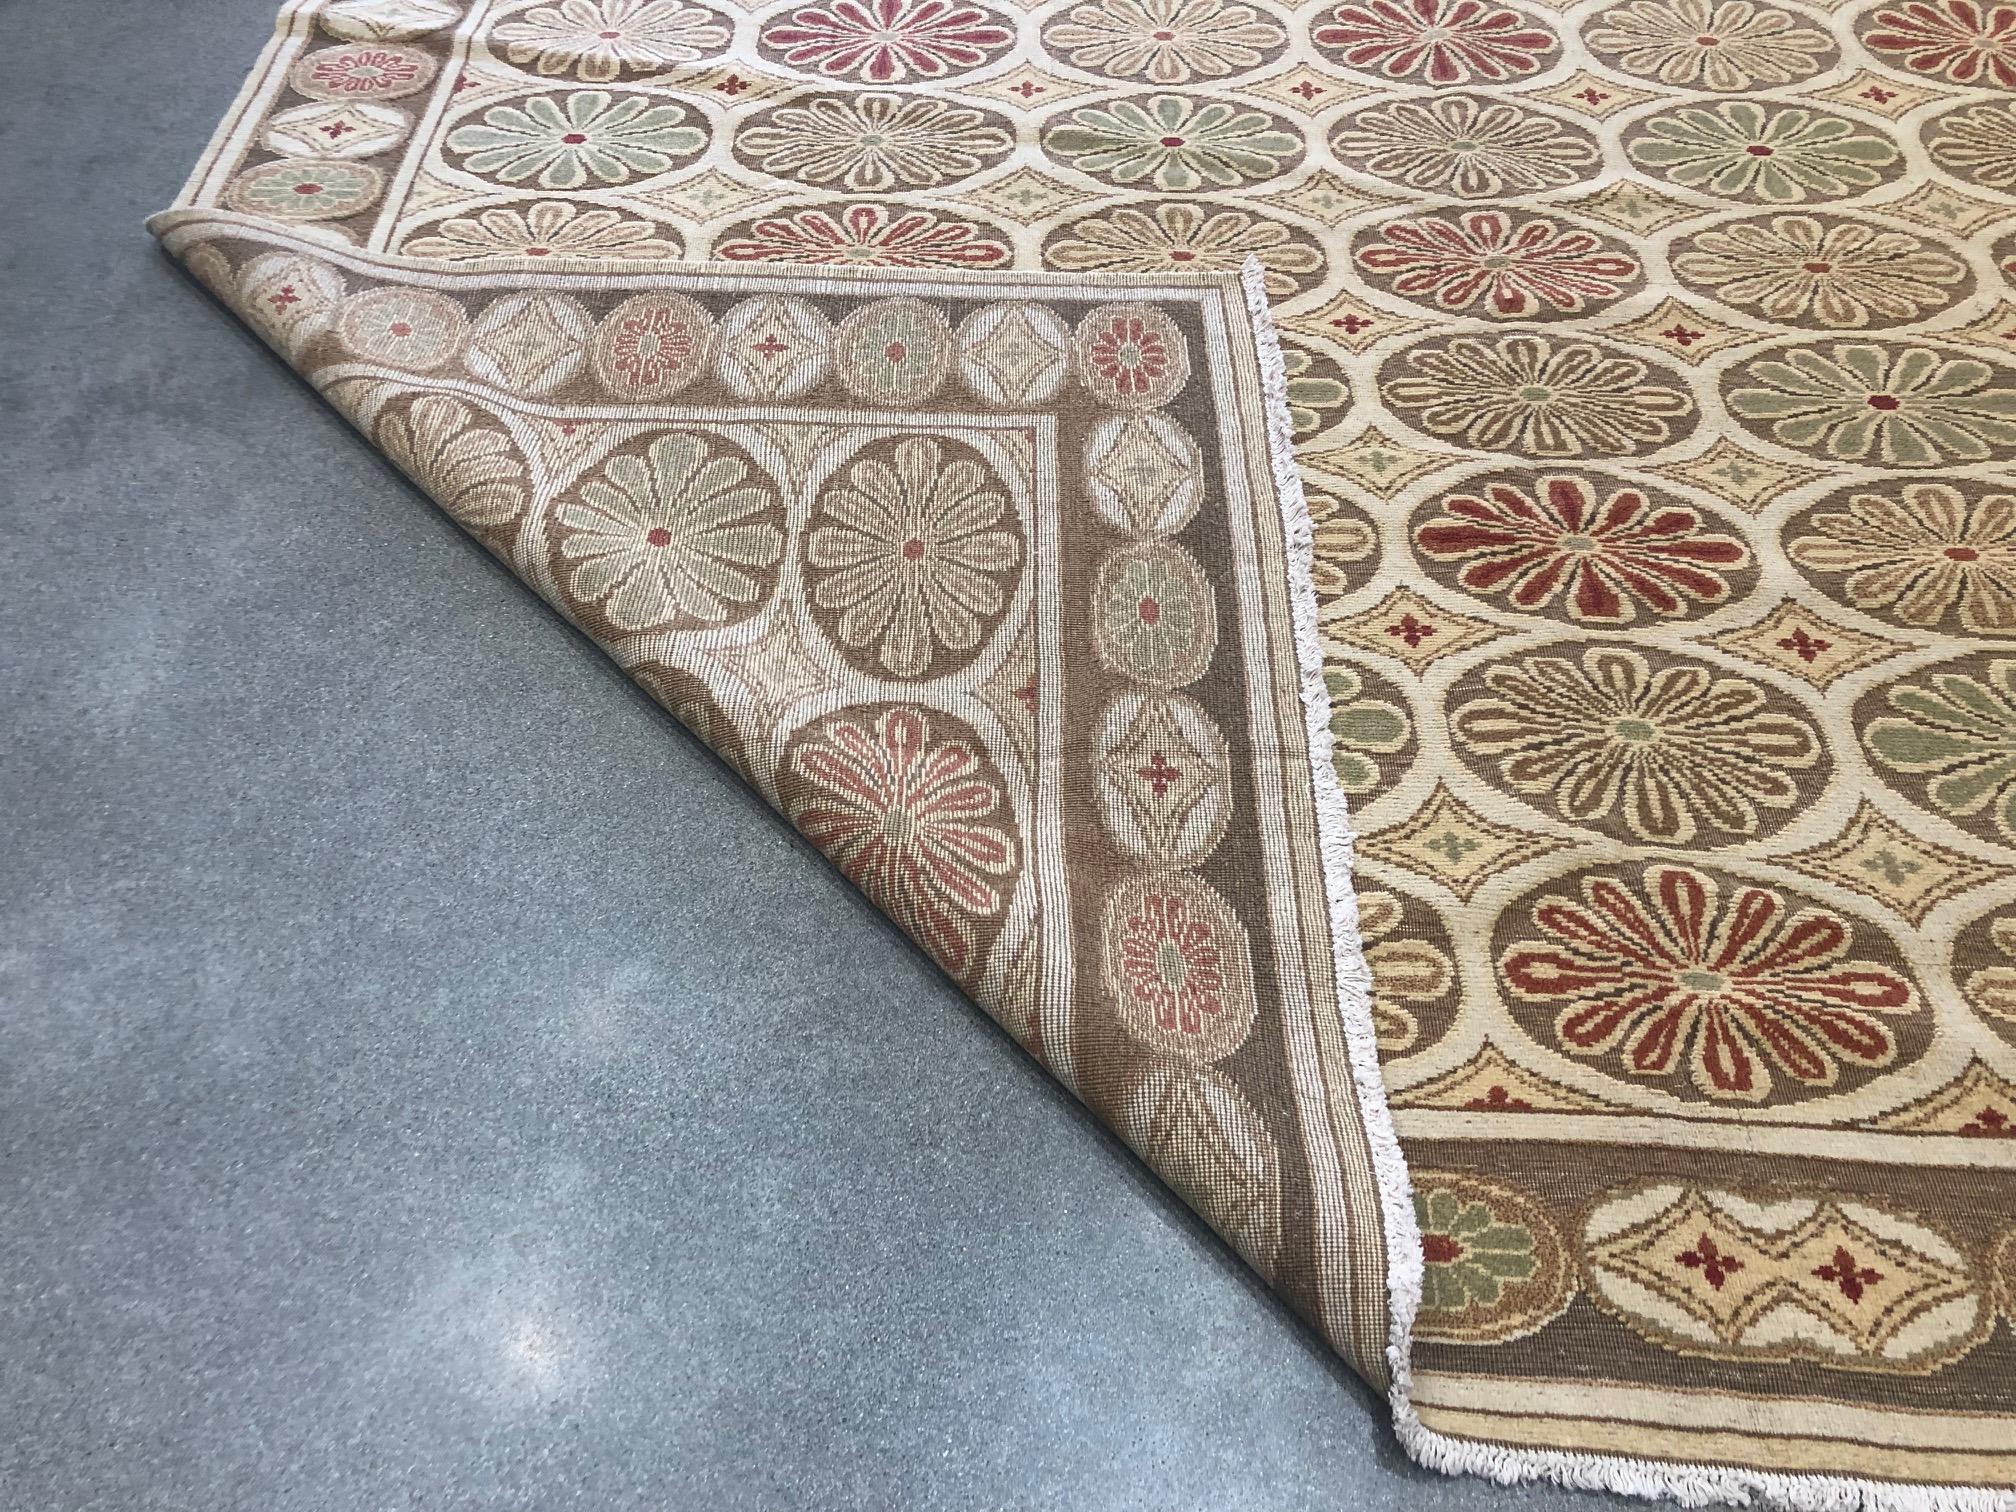 European design rug
Colors: Tan, cream, beige, brown, rust and green.